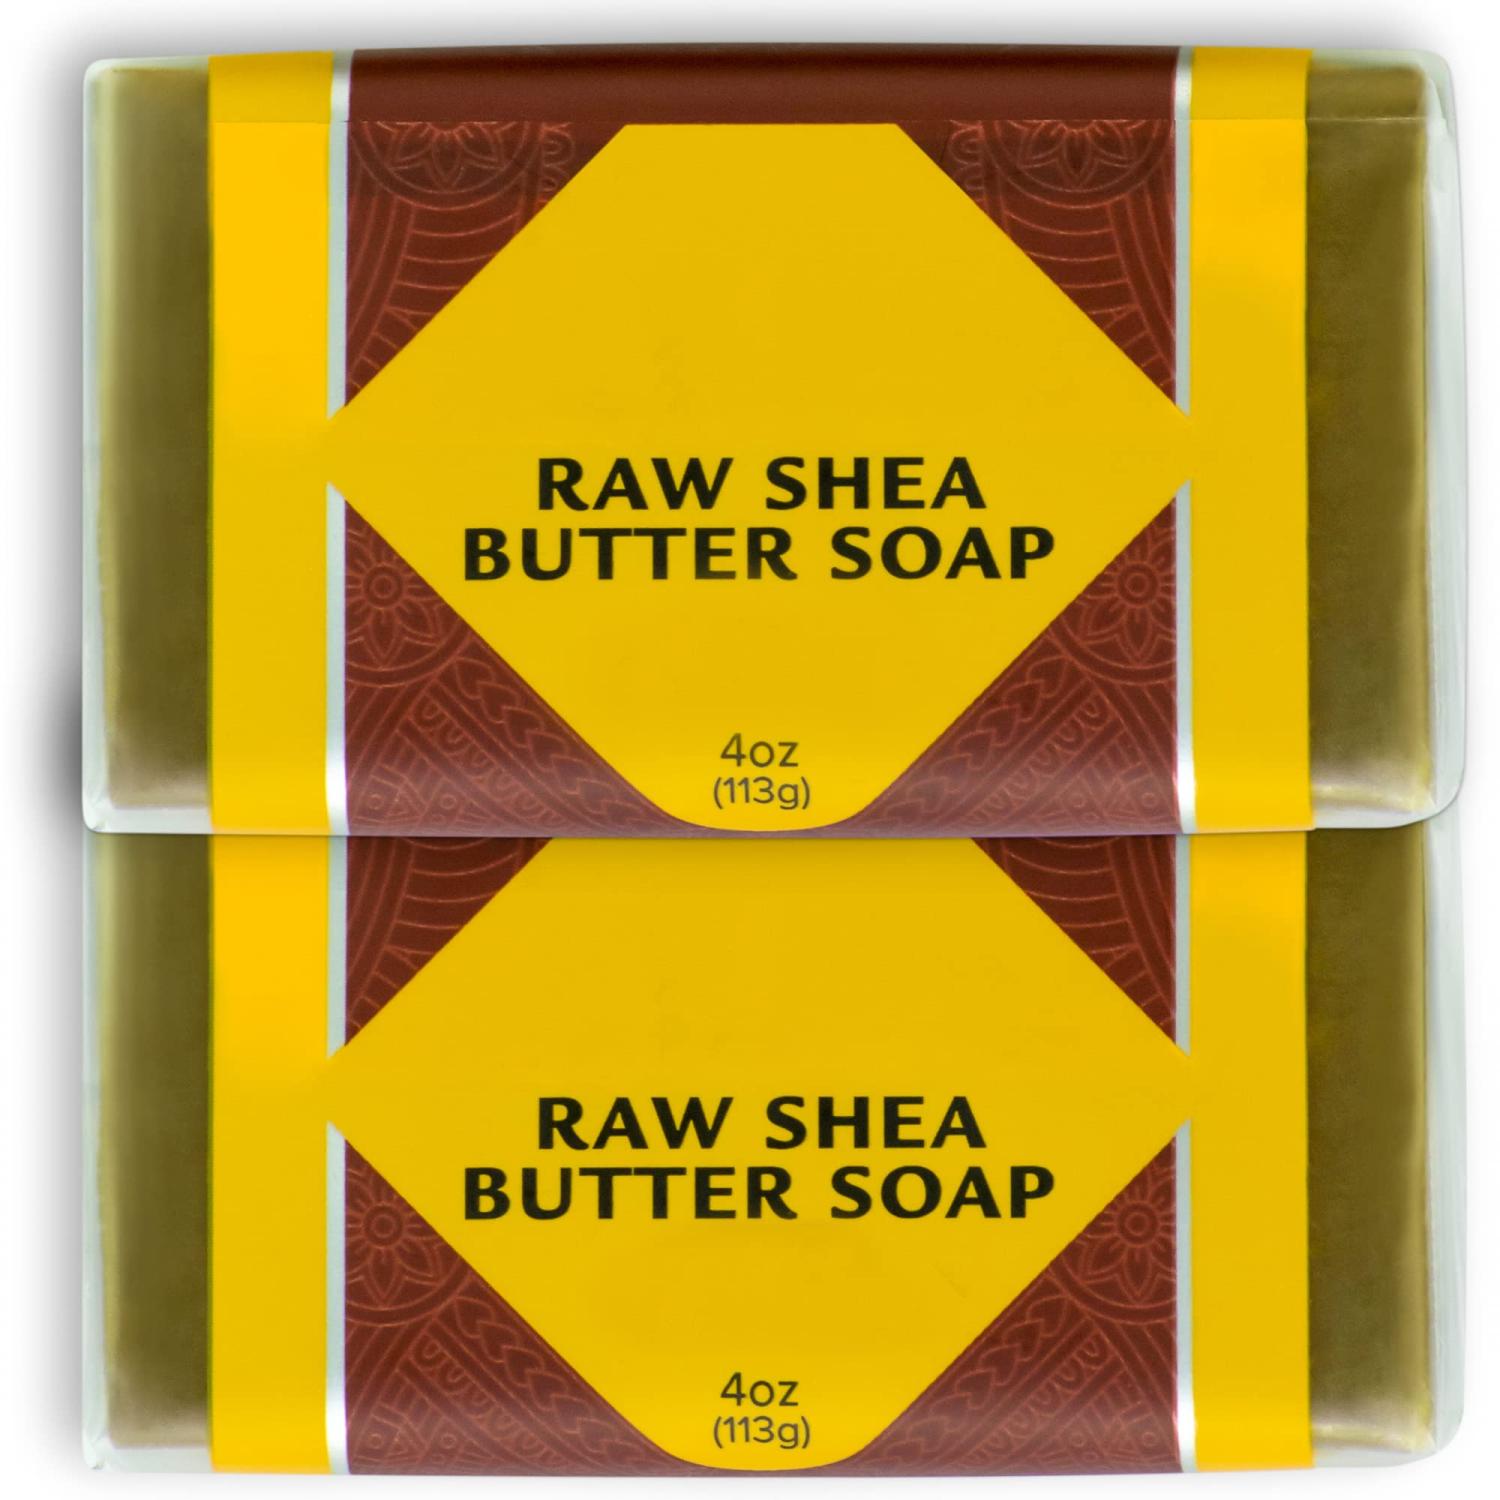 Shea Butter Bar Soap - 7 oz